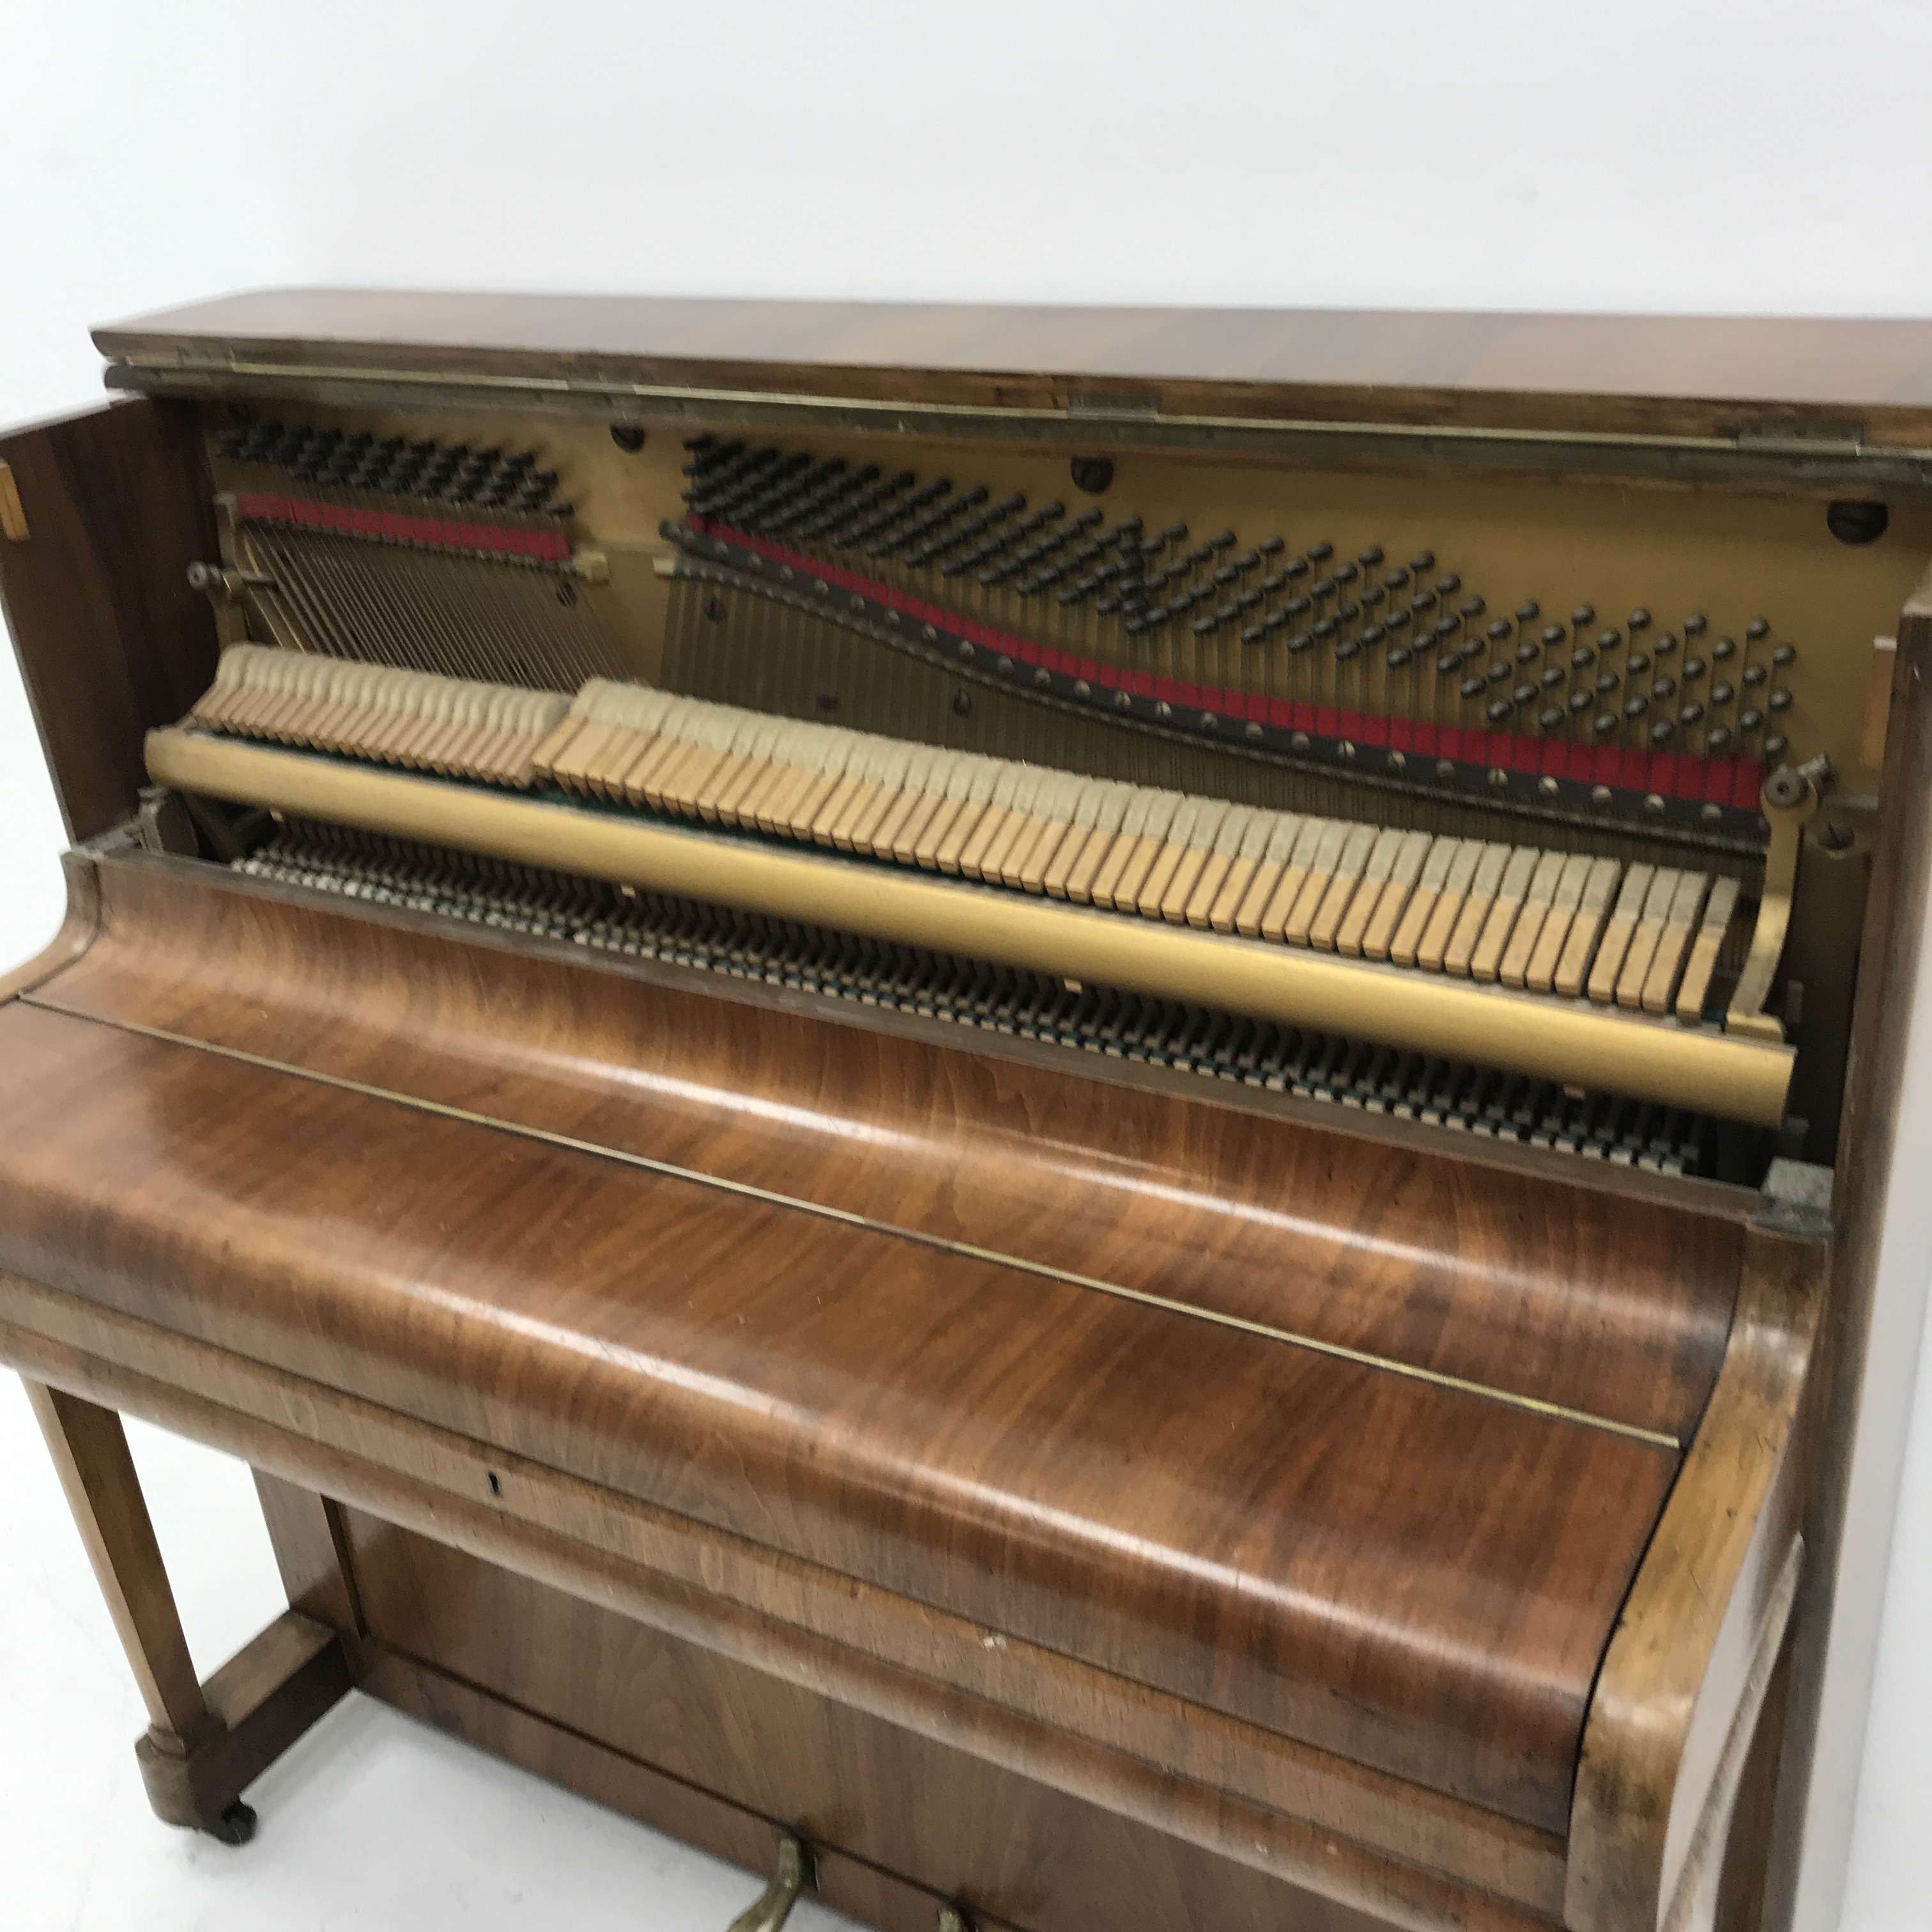 Godfrey walnut cased overstrung upright piano, W124cm, H113cm - Image 9 of 10